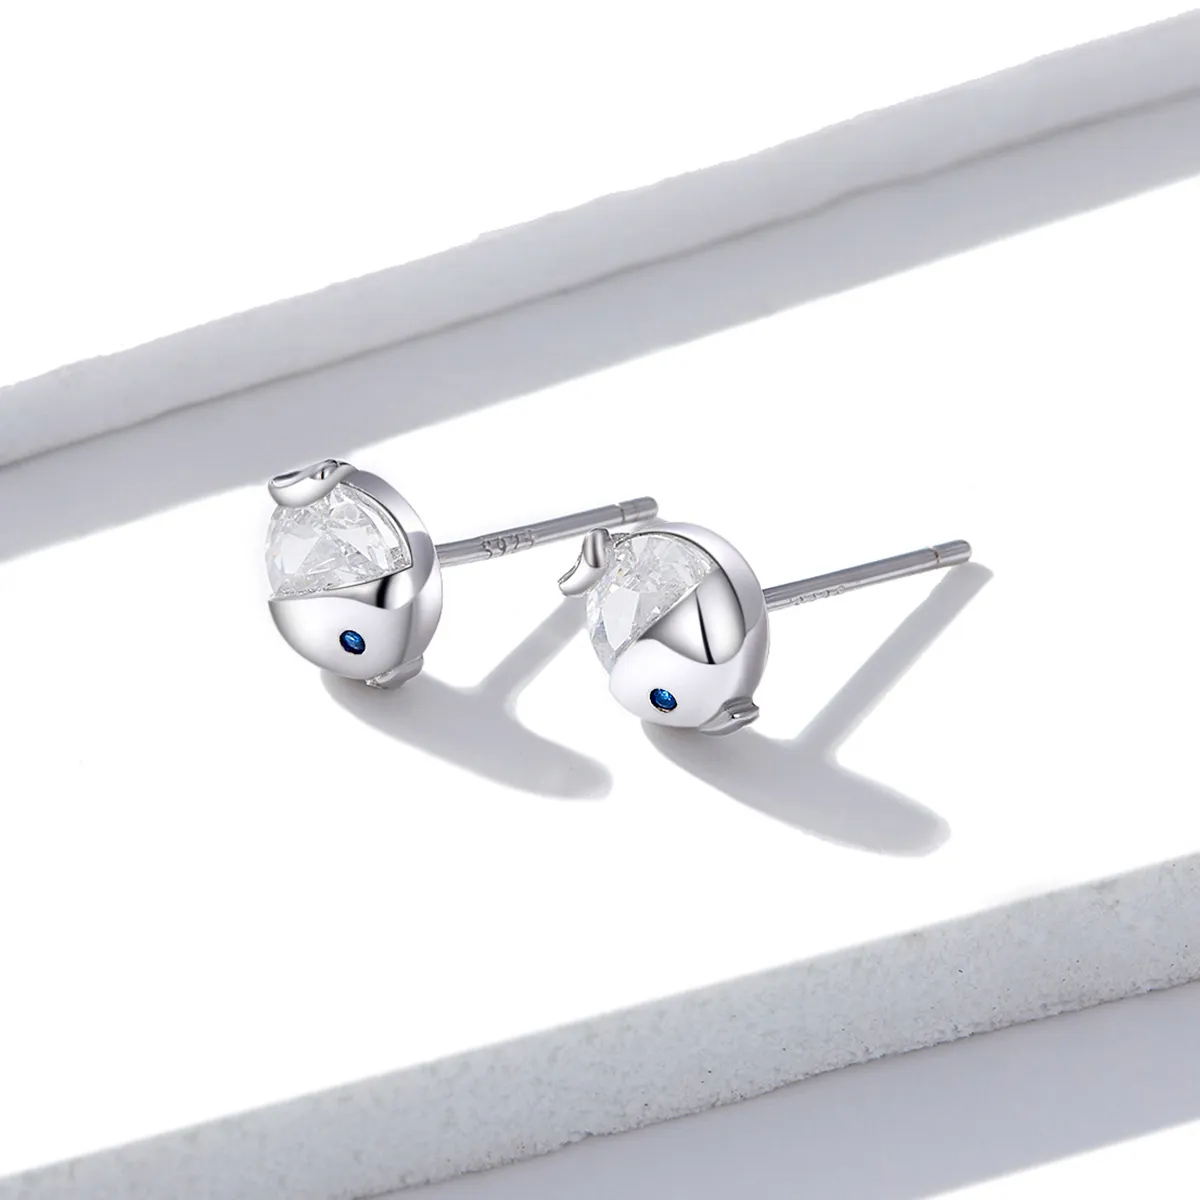 Pandora Style Silver Kissing Fish Stud Earrings - BSE204